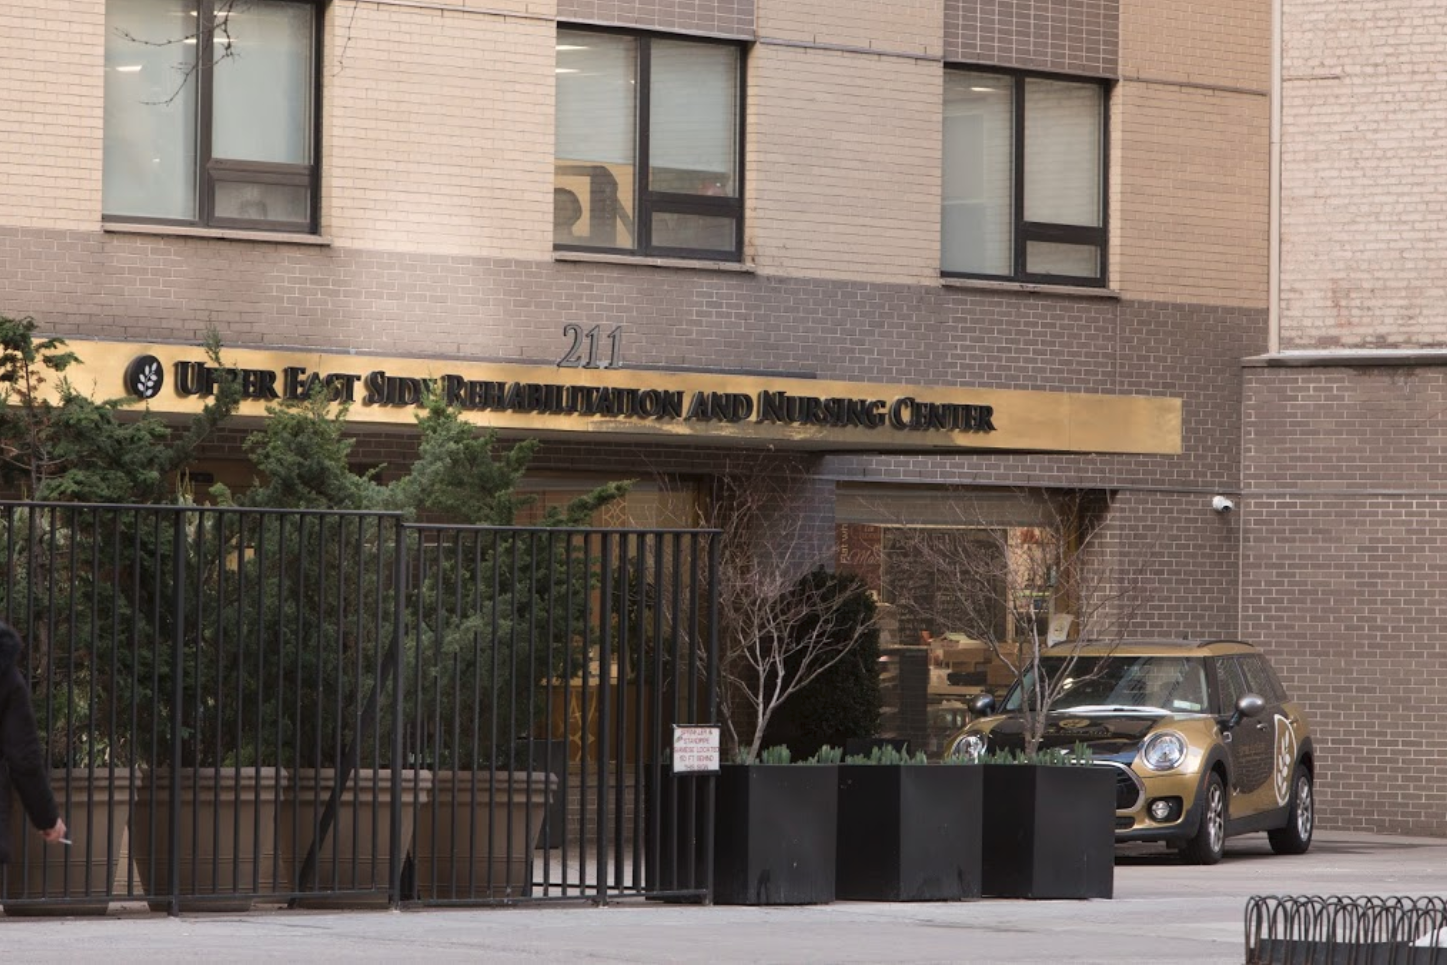 Upper East Side Rehabilitation and Nursing Center Photo